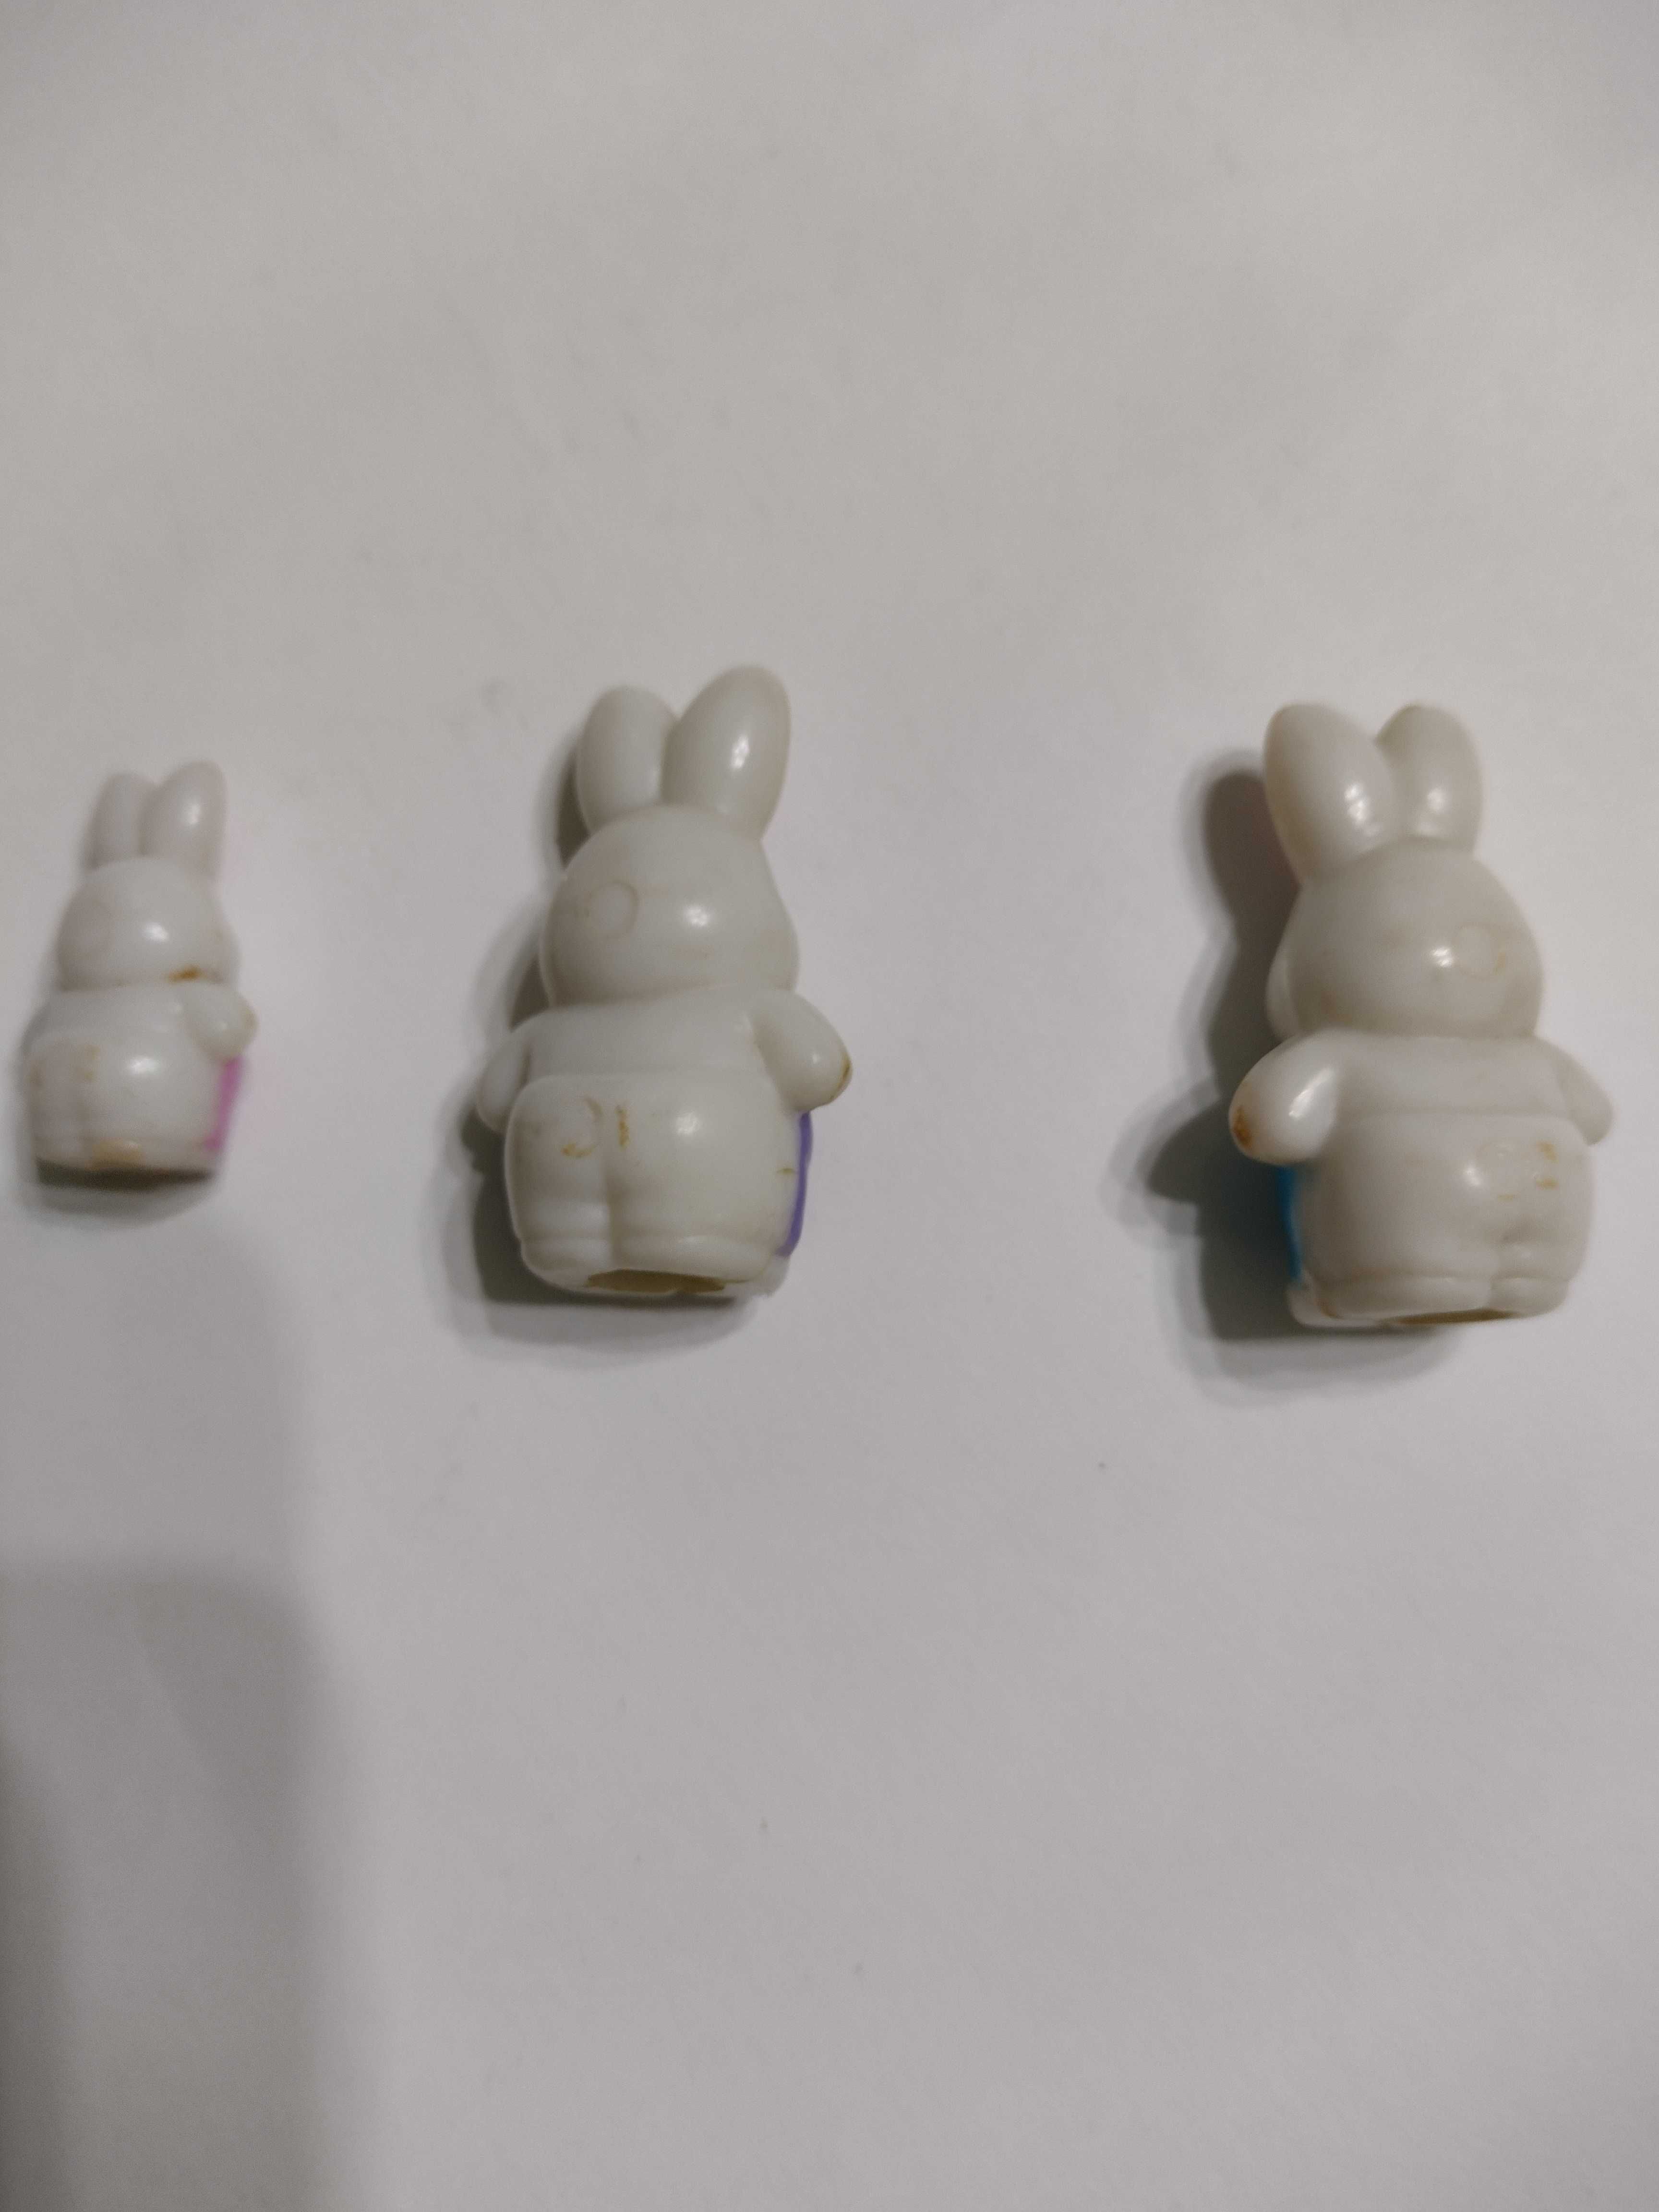 Figurka królik rodzina królików polly pocket 3 szt. lata 90-te